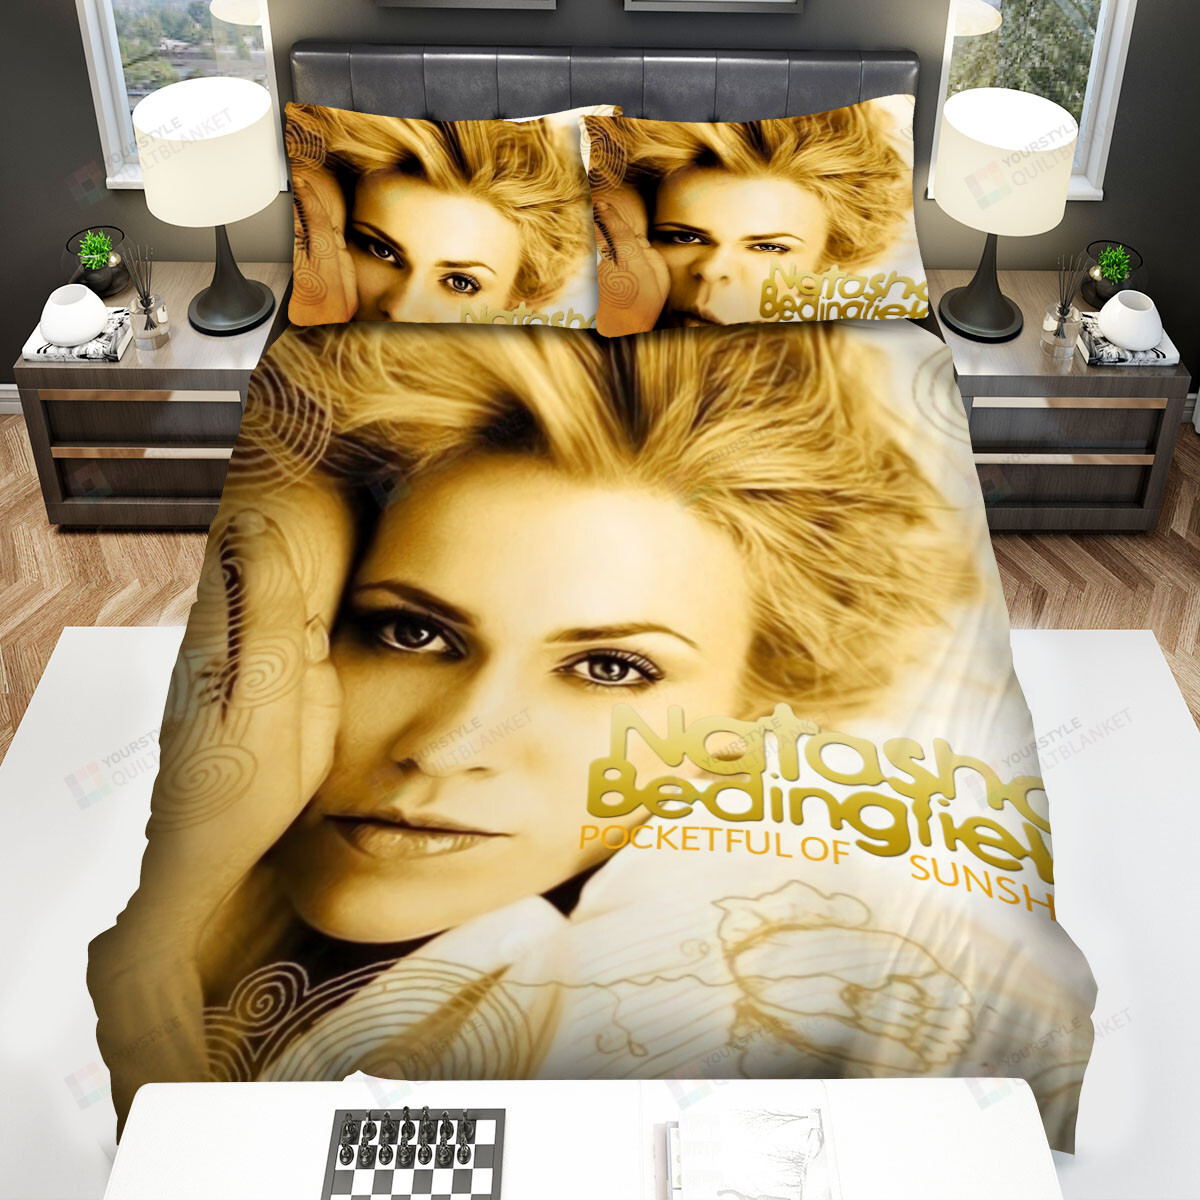 Natasha Bedingfield Pocketful Of Sunshine Artwork Album Cover Bed Sheets Spread Comforter Duvet Cover Bedding Sets